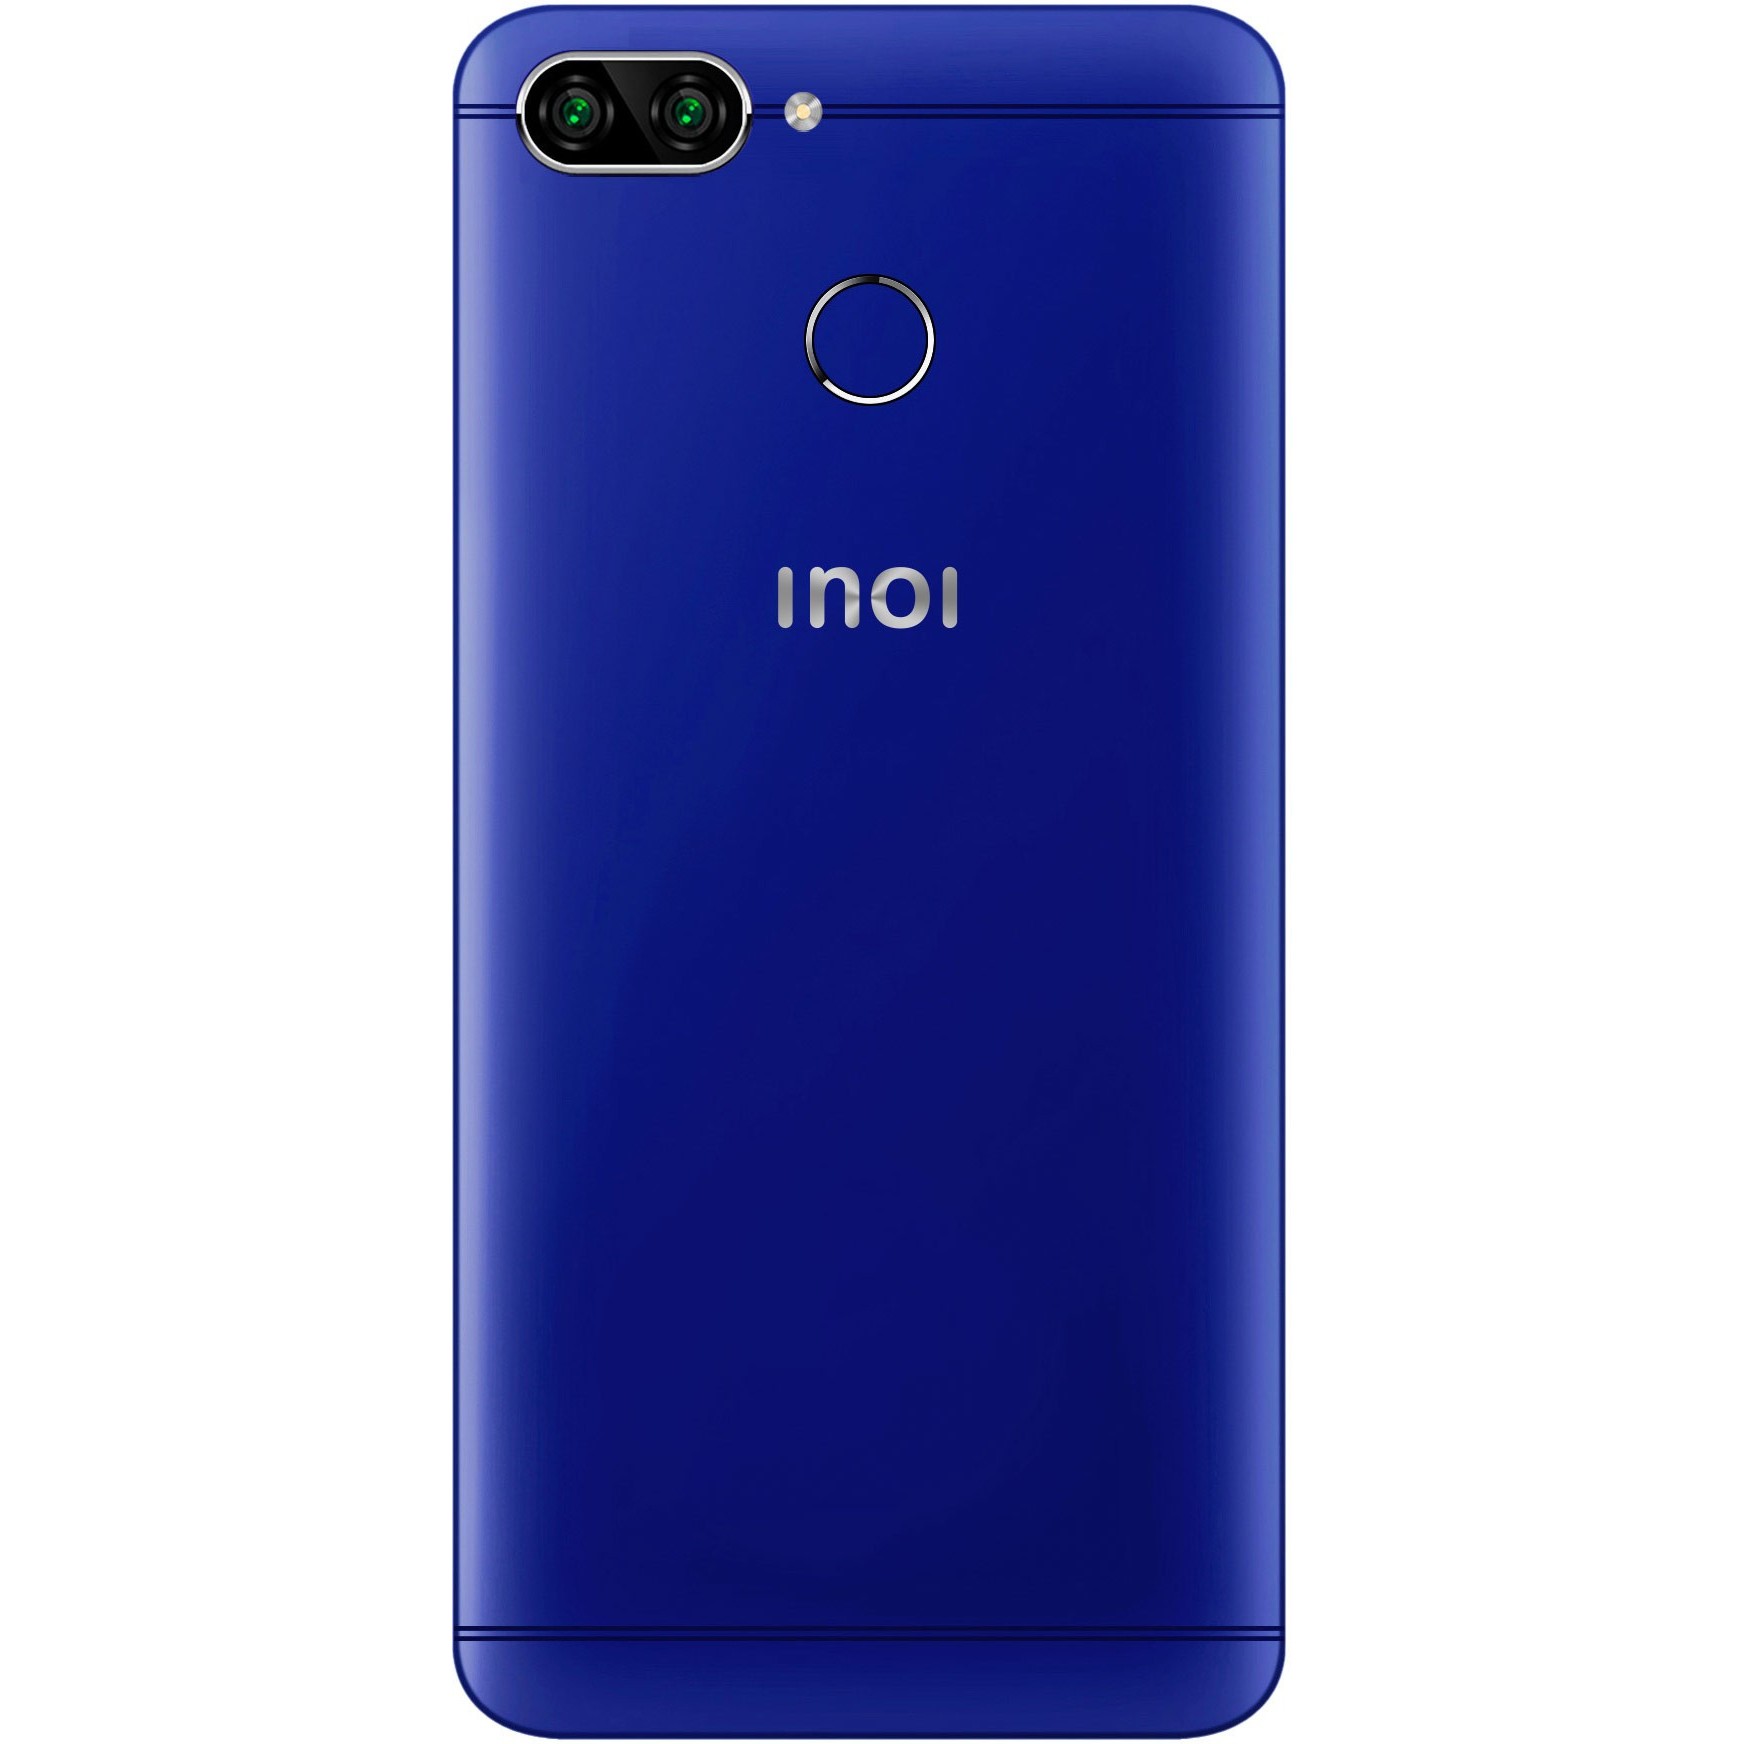 Файв про. INOI 5 Pro. Телефон INOI Five Pro. Смартфон INOI 5i, синий. LNOL 5.